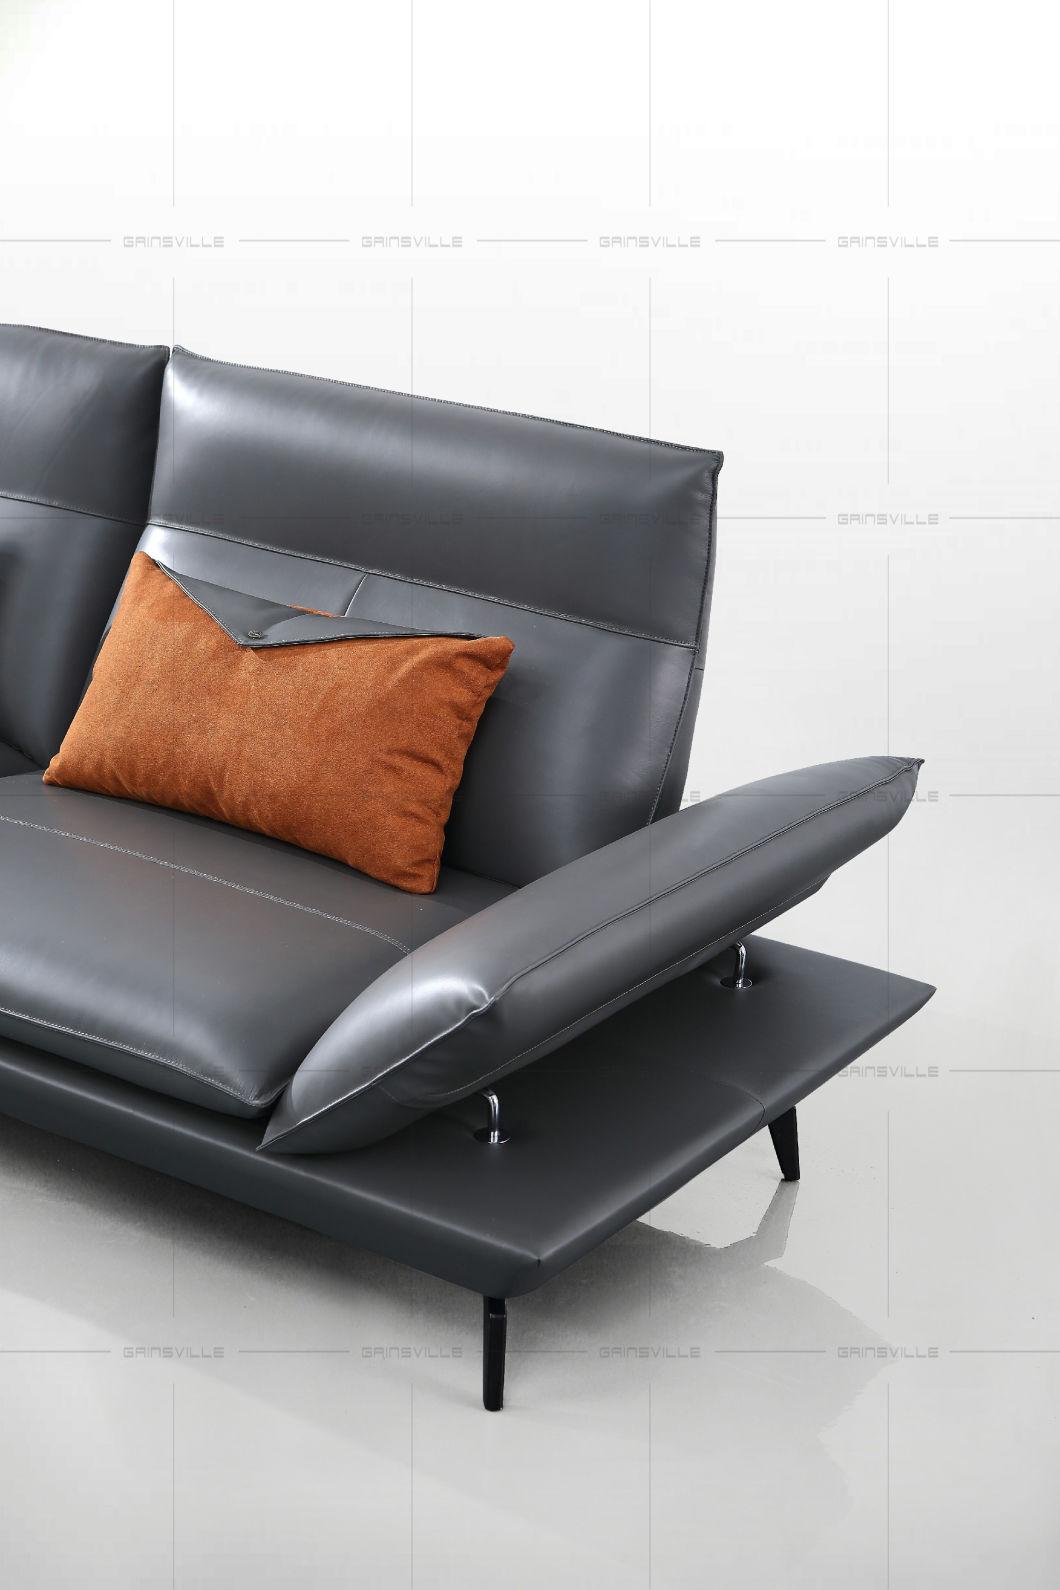 Hot Sale fashion Modern Living Room Sofa Modern Sofa Upholstered Sofa Fuctional Sofa